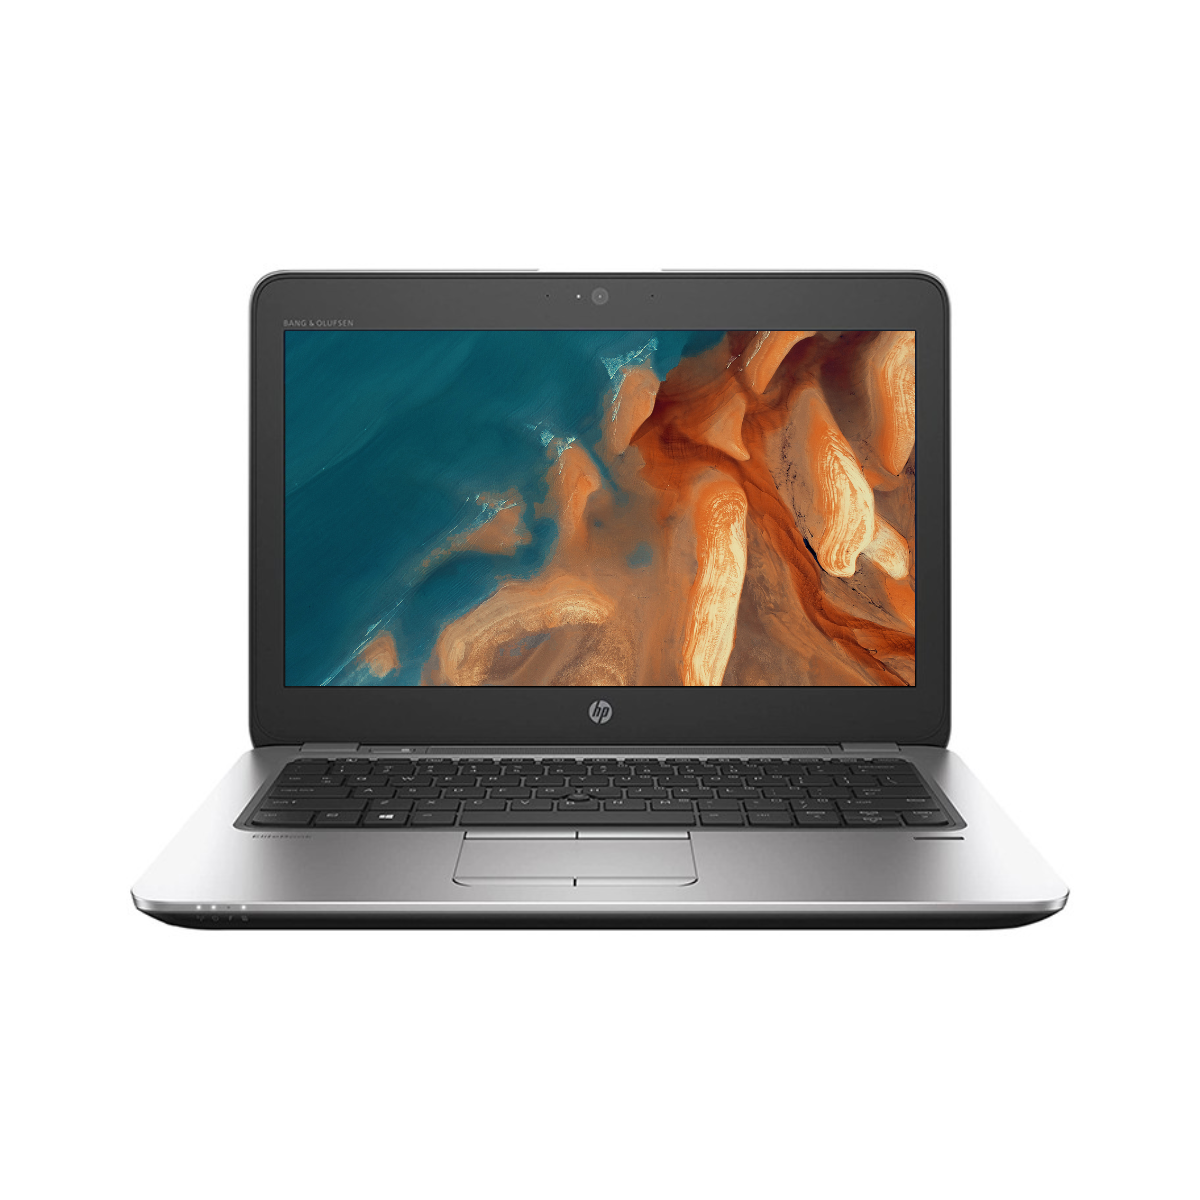 HP EliteBook 820 G3 i5 (6th Gen) 8GB 256GB SSD 12.5